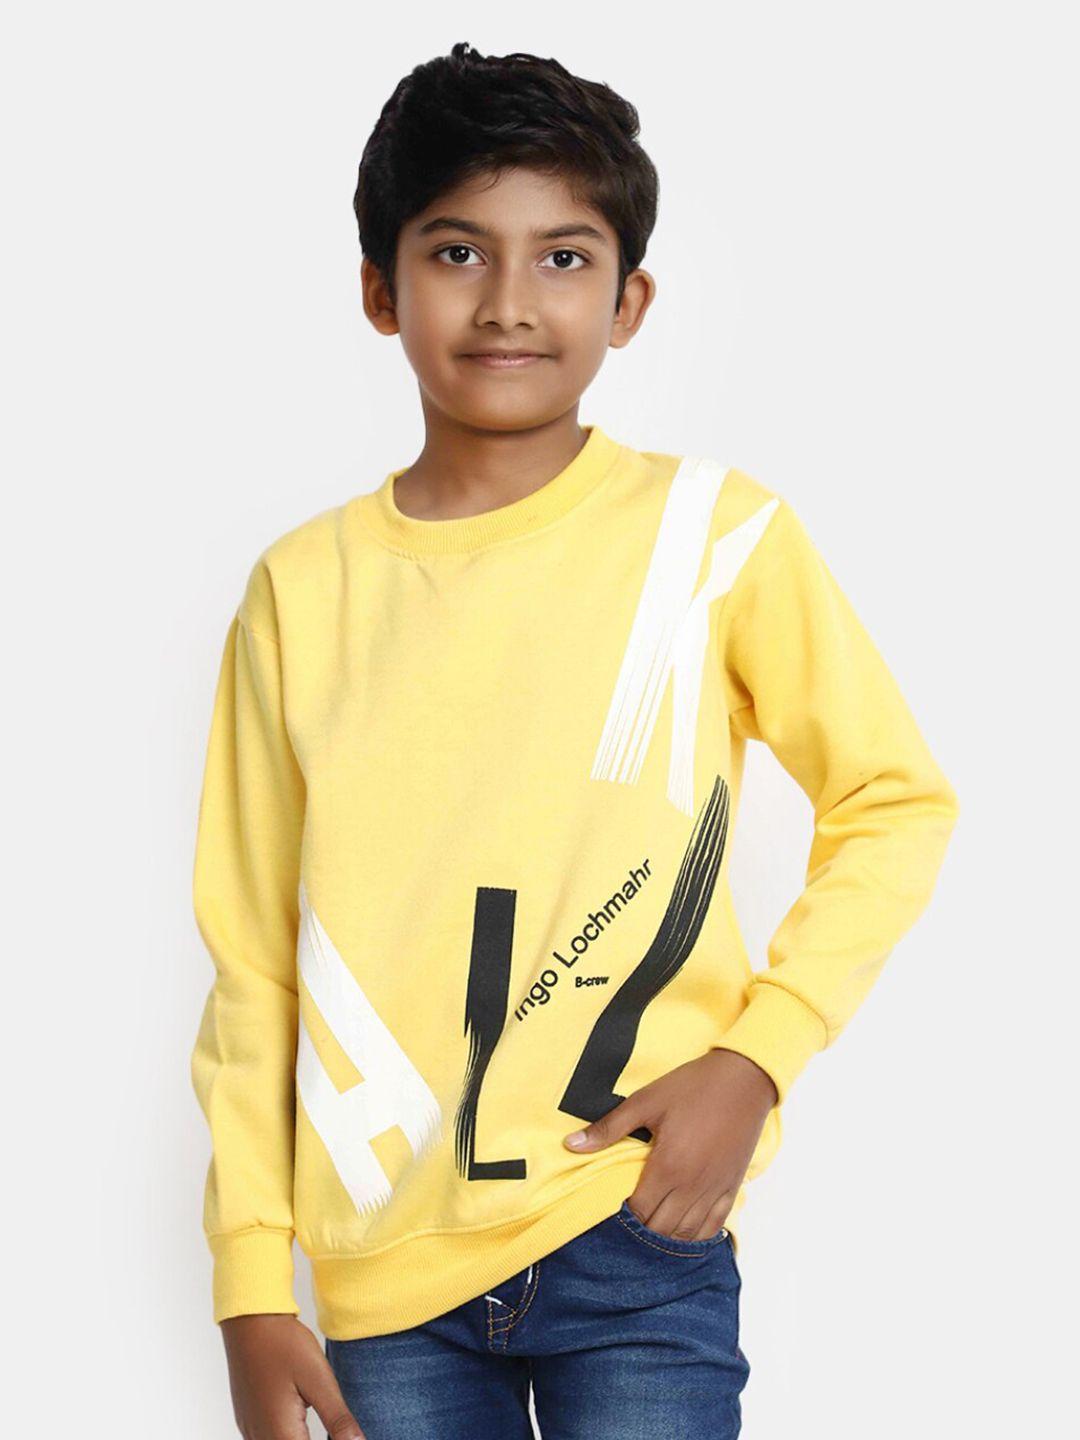 v-mart boys typography printed sweatshirt